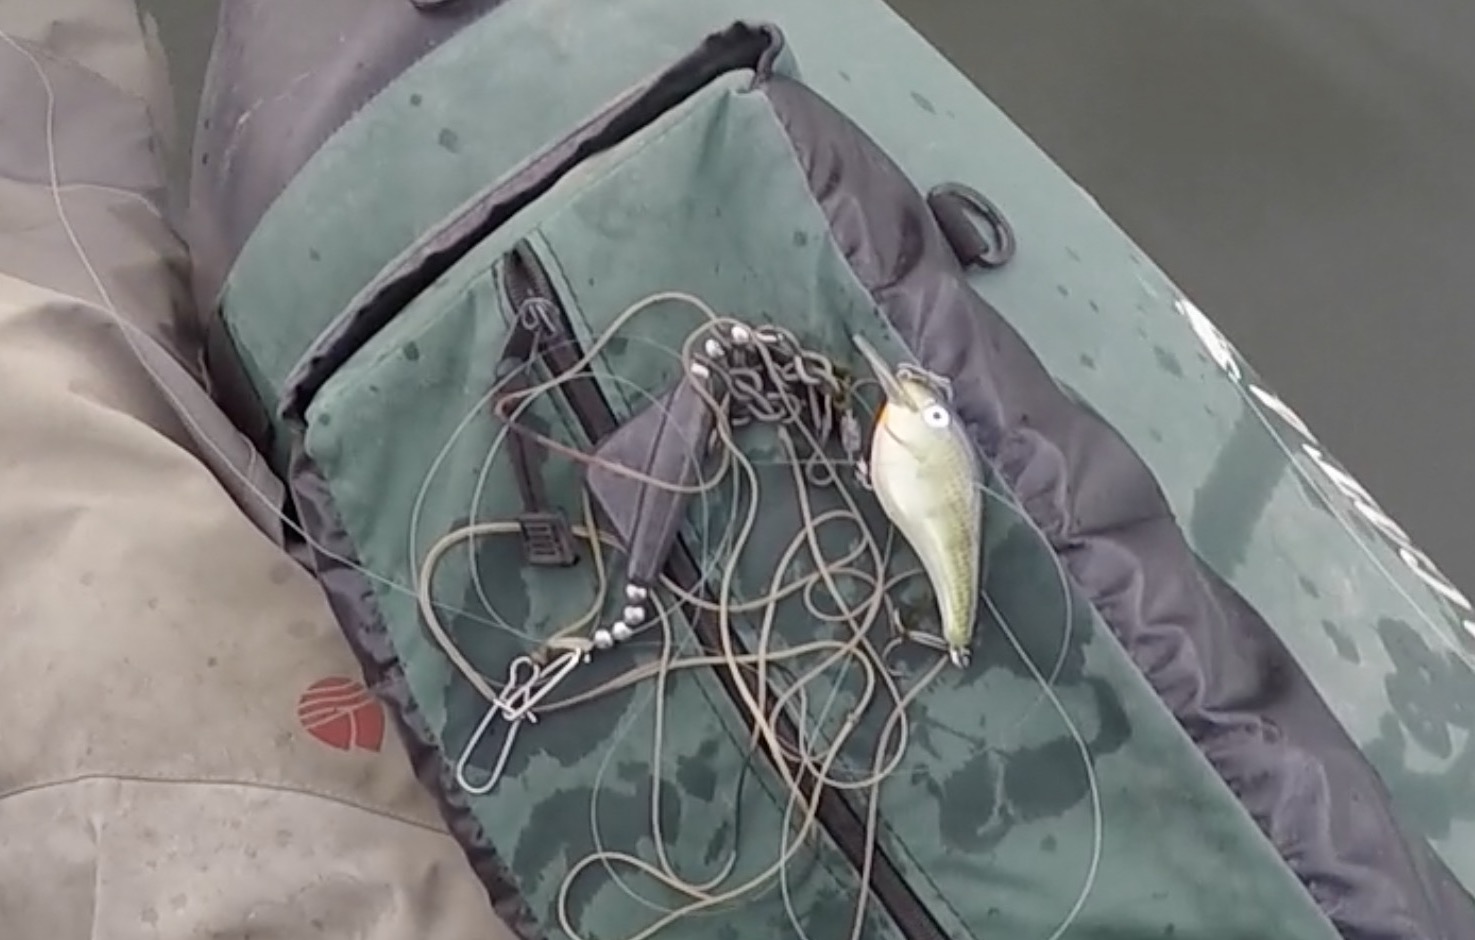 Lure knocker/retriever - Fishing Tackle - Bass Fishing Forums